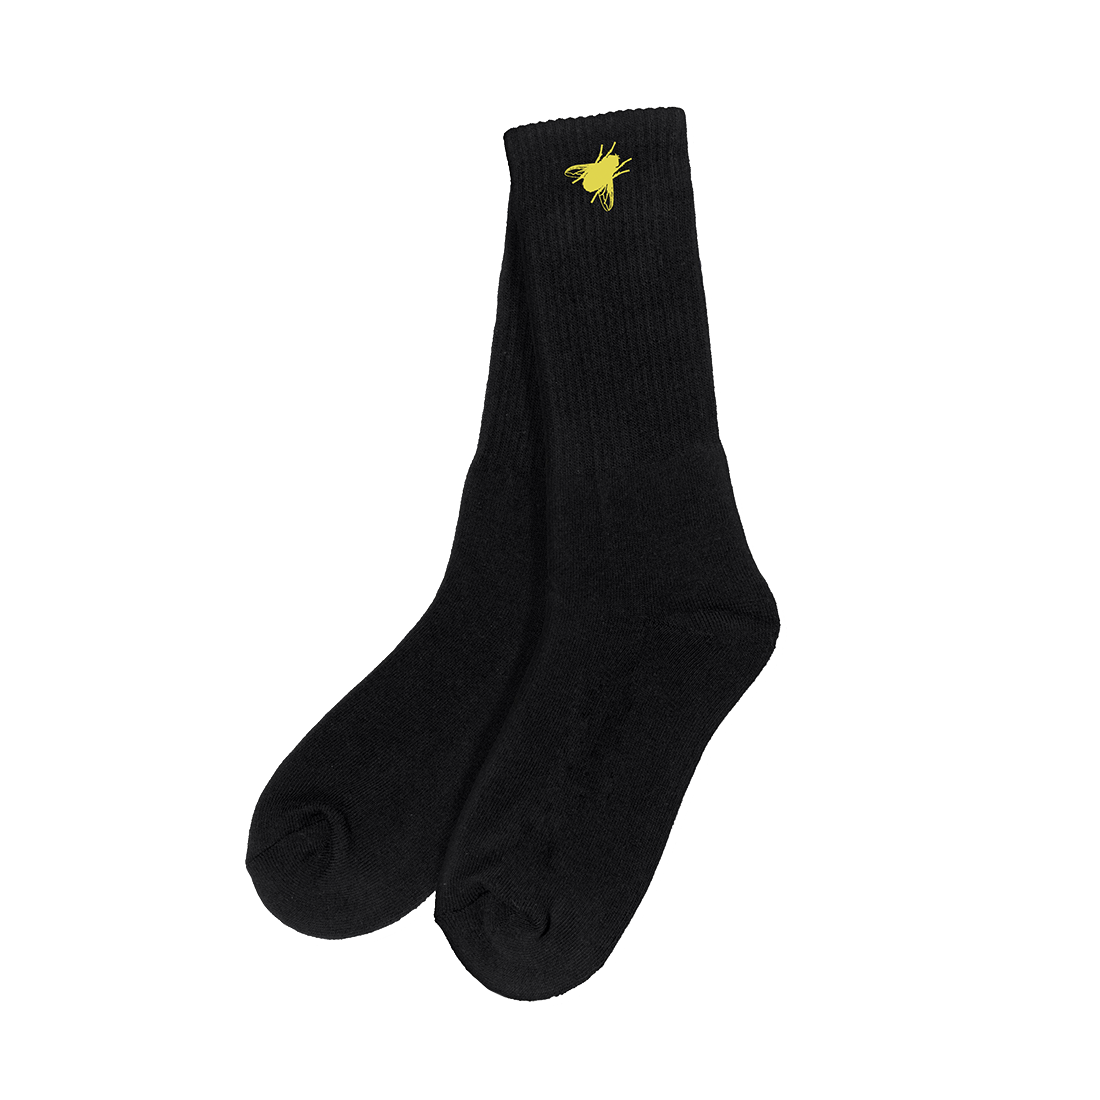 Dizzee Rascal - E3 AF Black Socks